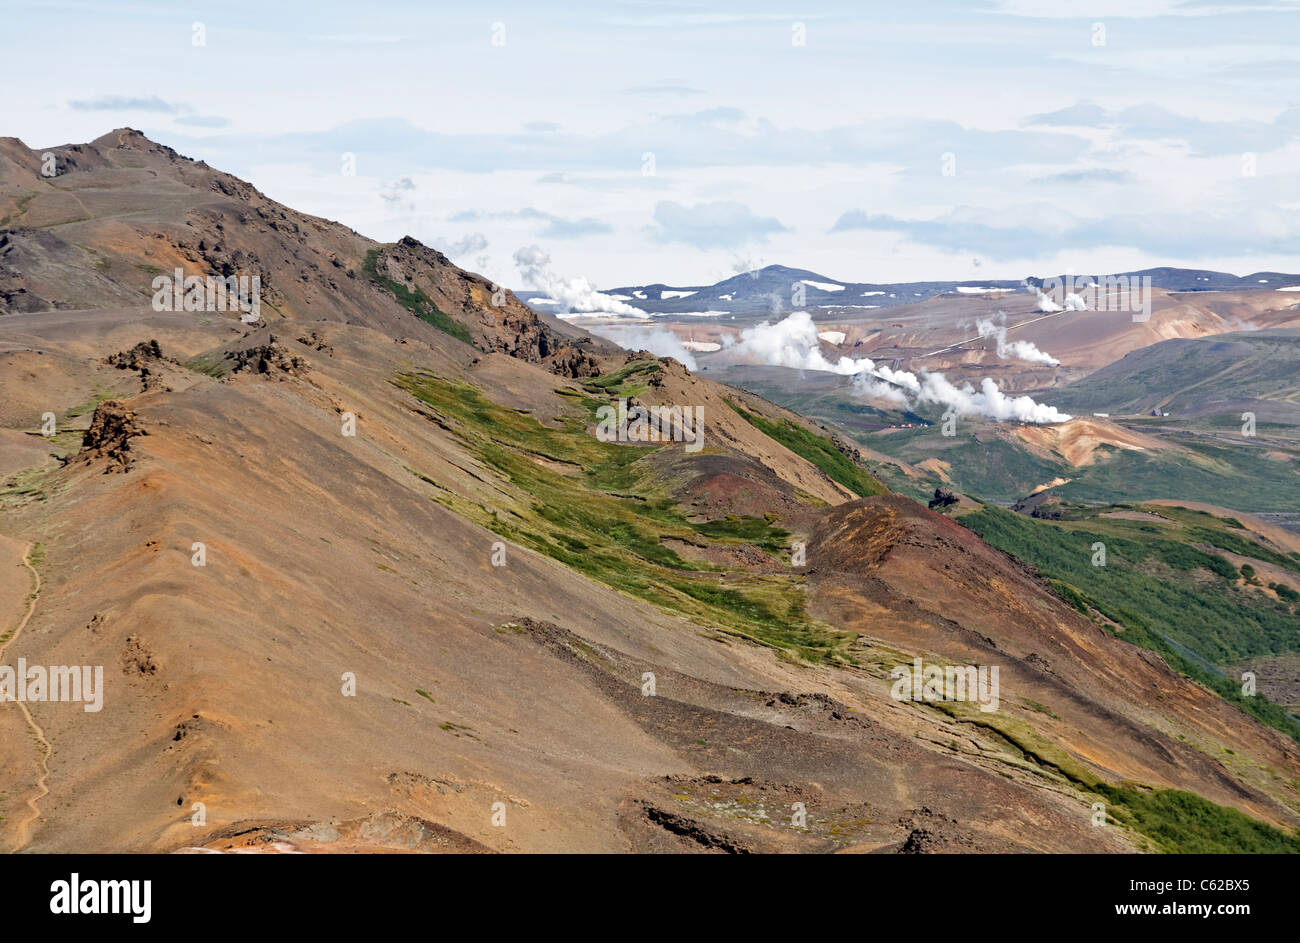 The landscape at Namafjall, Iceland Stock Photo